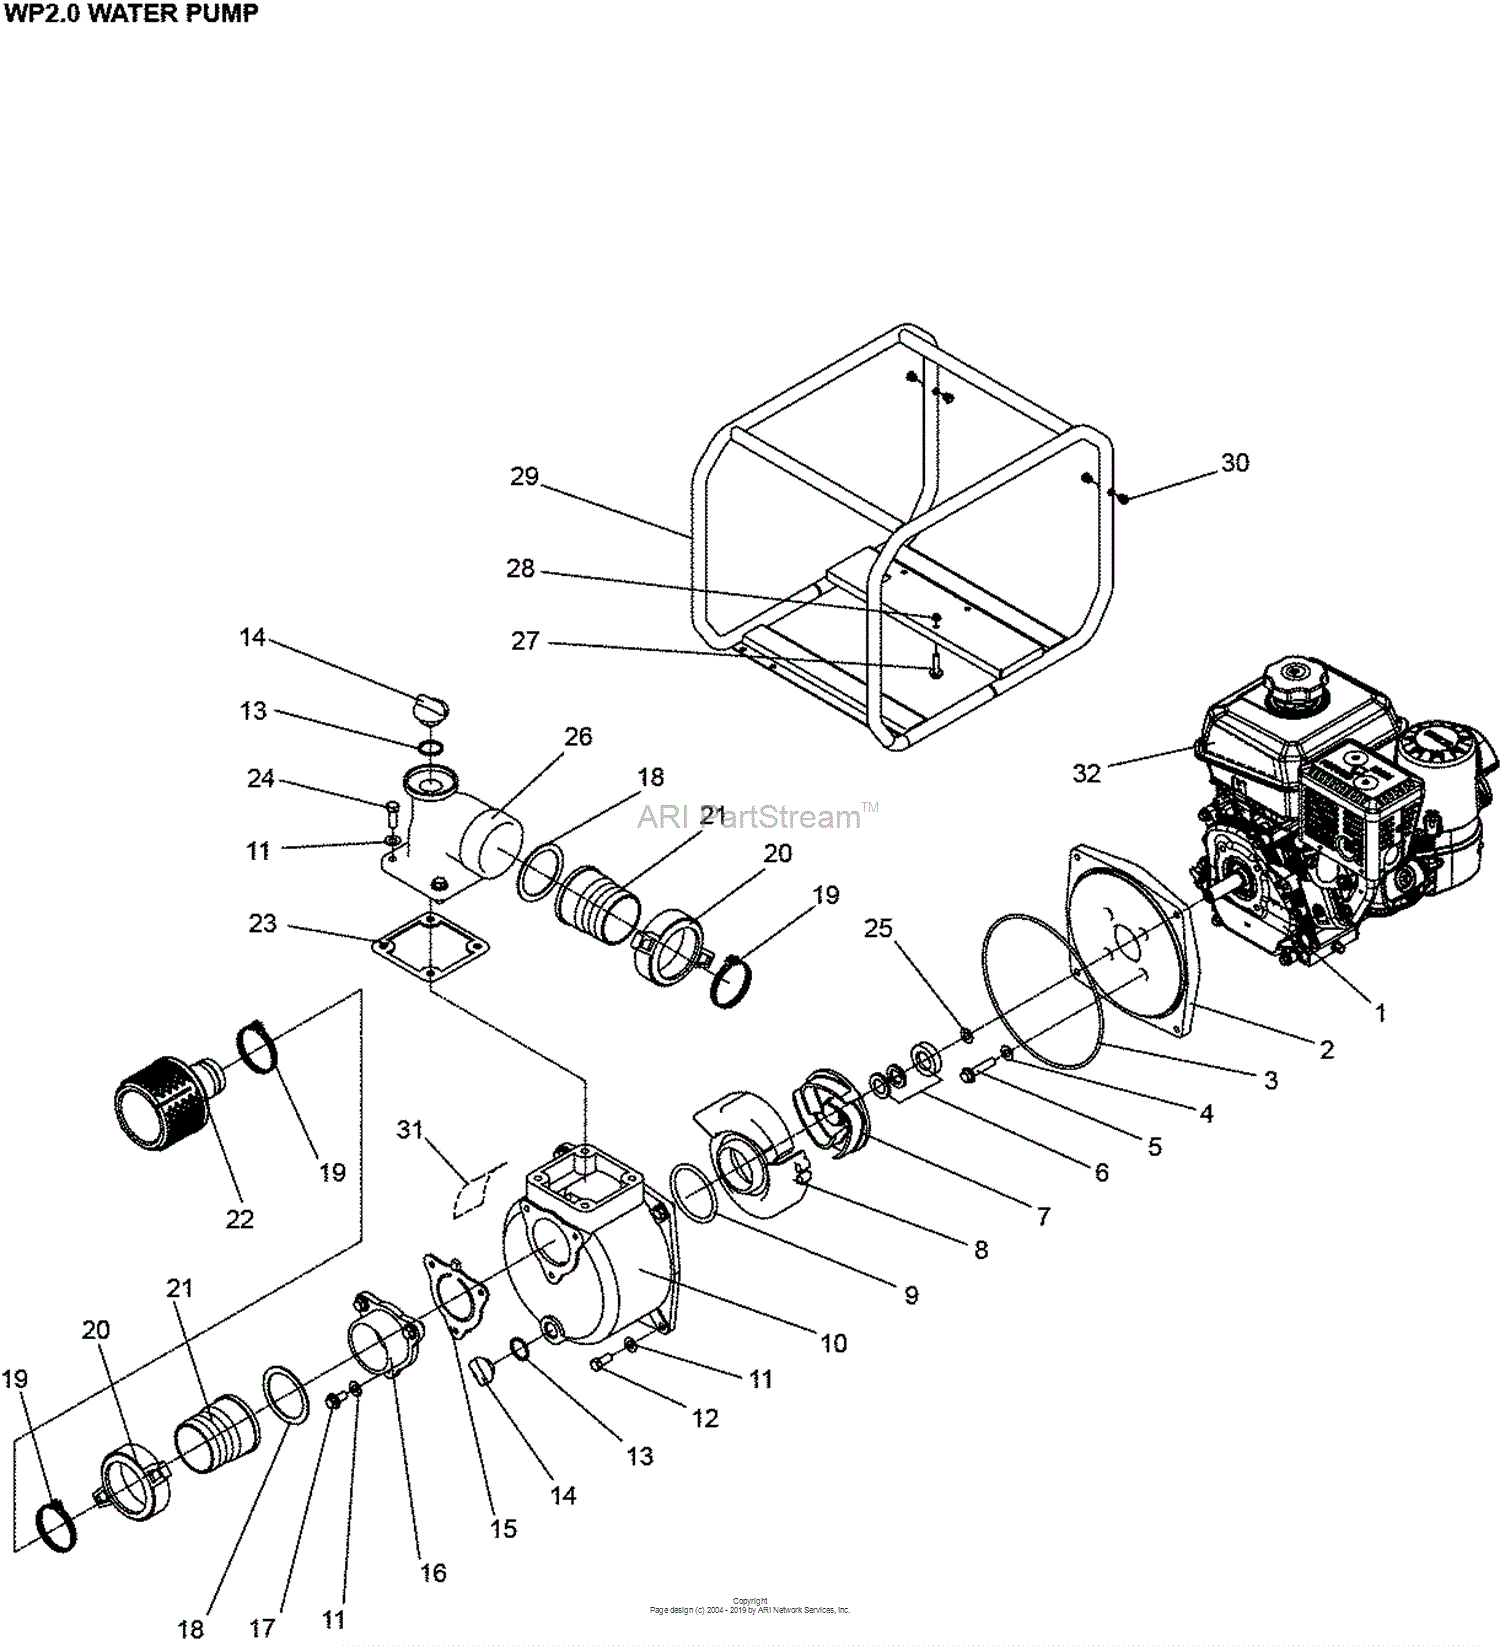 Diagram Wiring Diagram For Pump Full Version Hd Quality For Pump Kneediagram Digitalight It